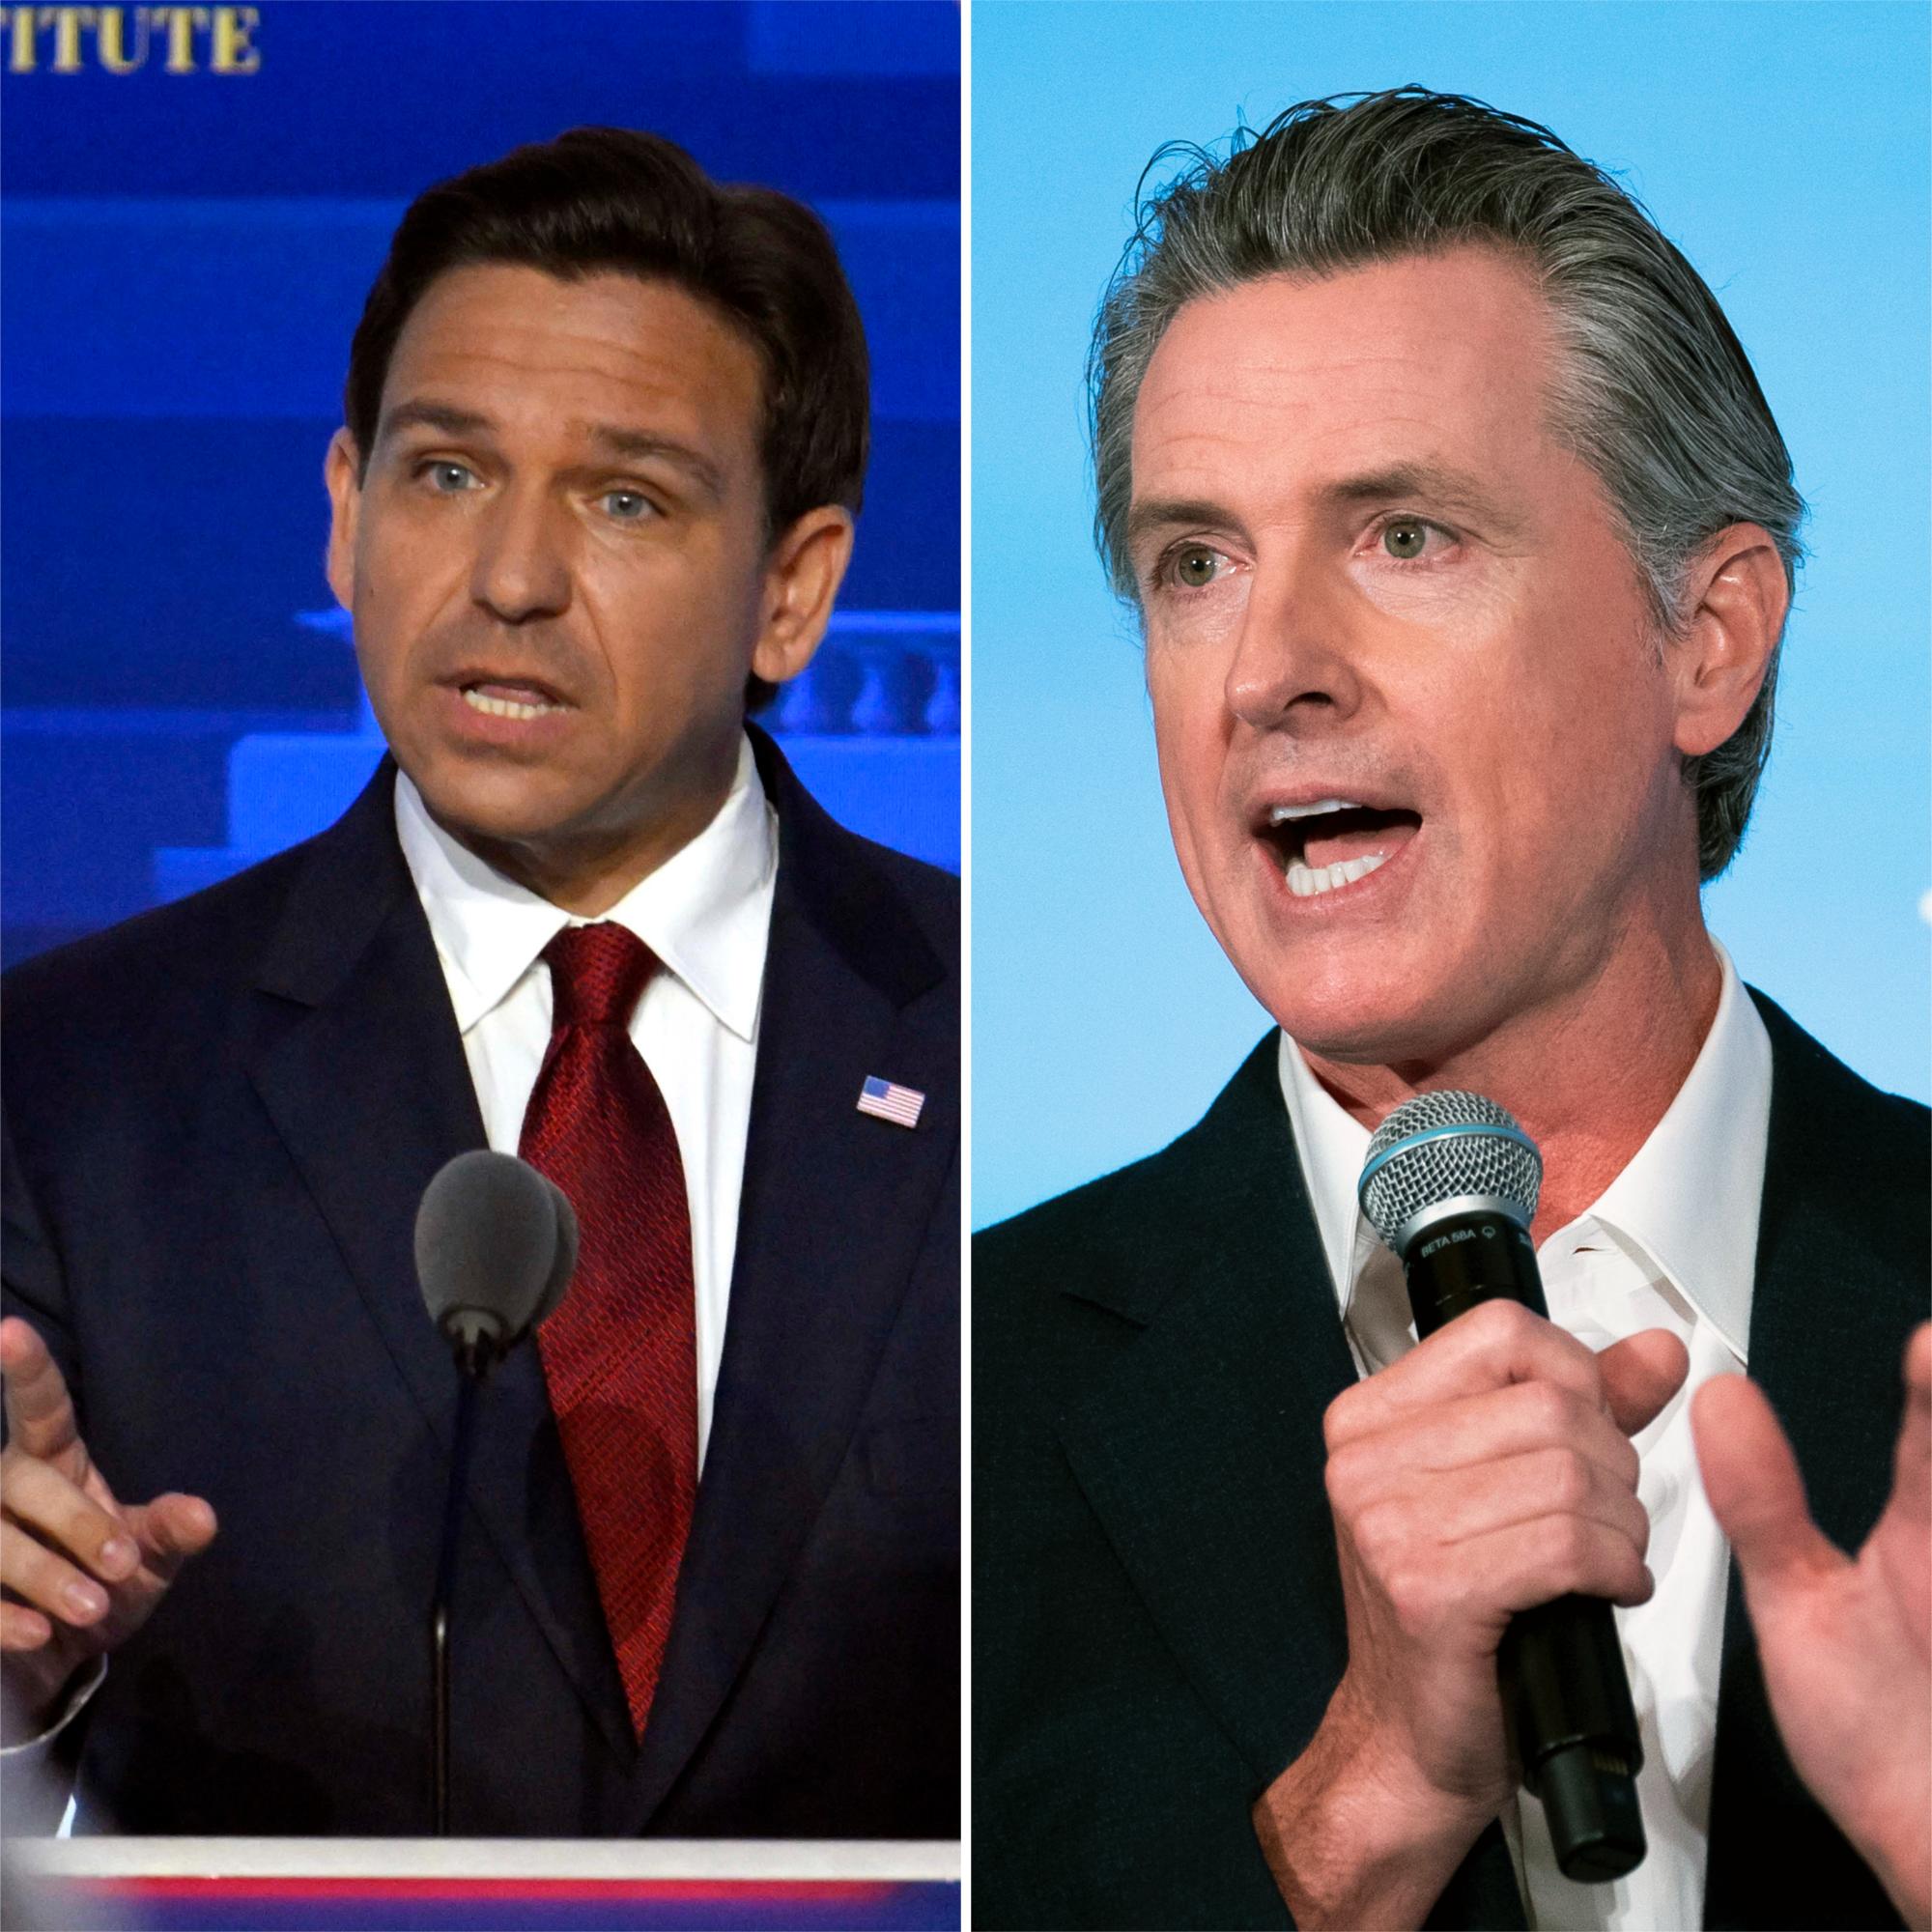 Florida Gov. Ron DeSantis and California Gov. Gavin Newsom debated each other Thursday night on Fox News.